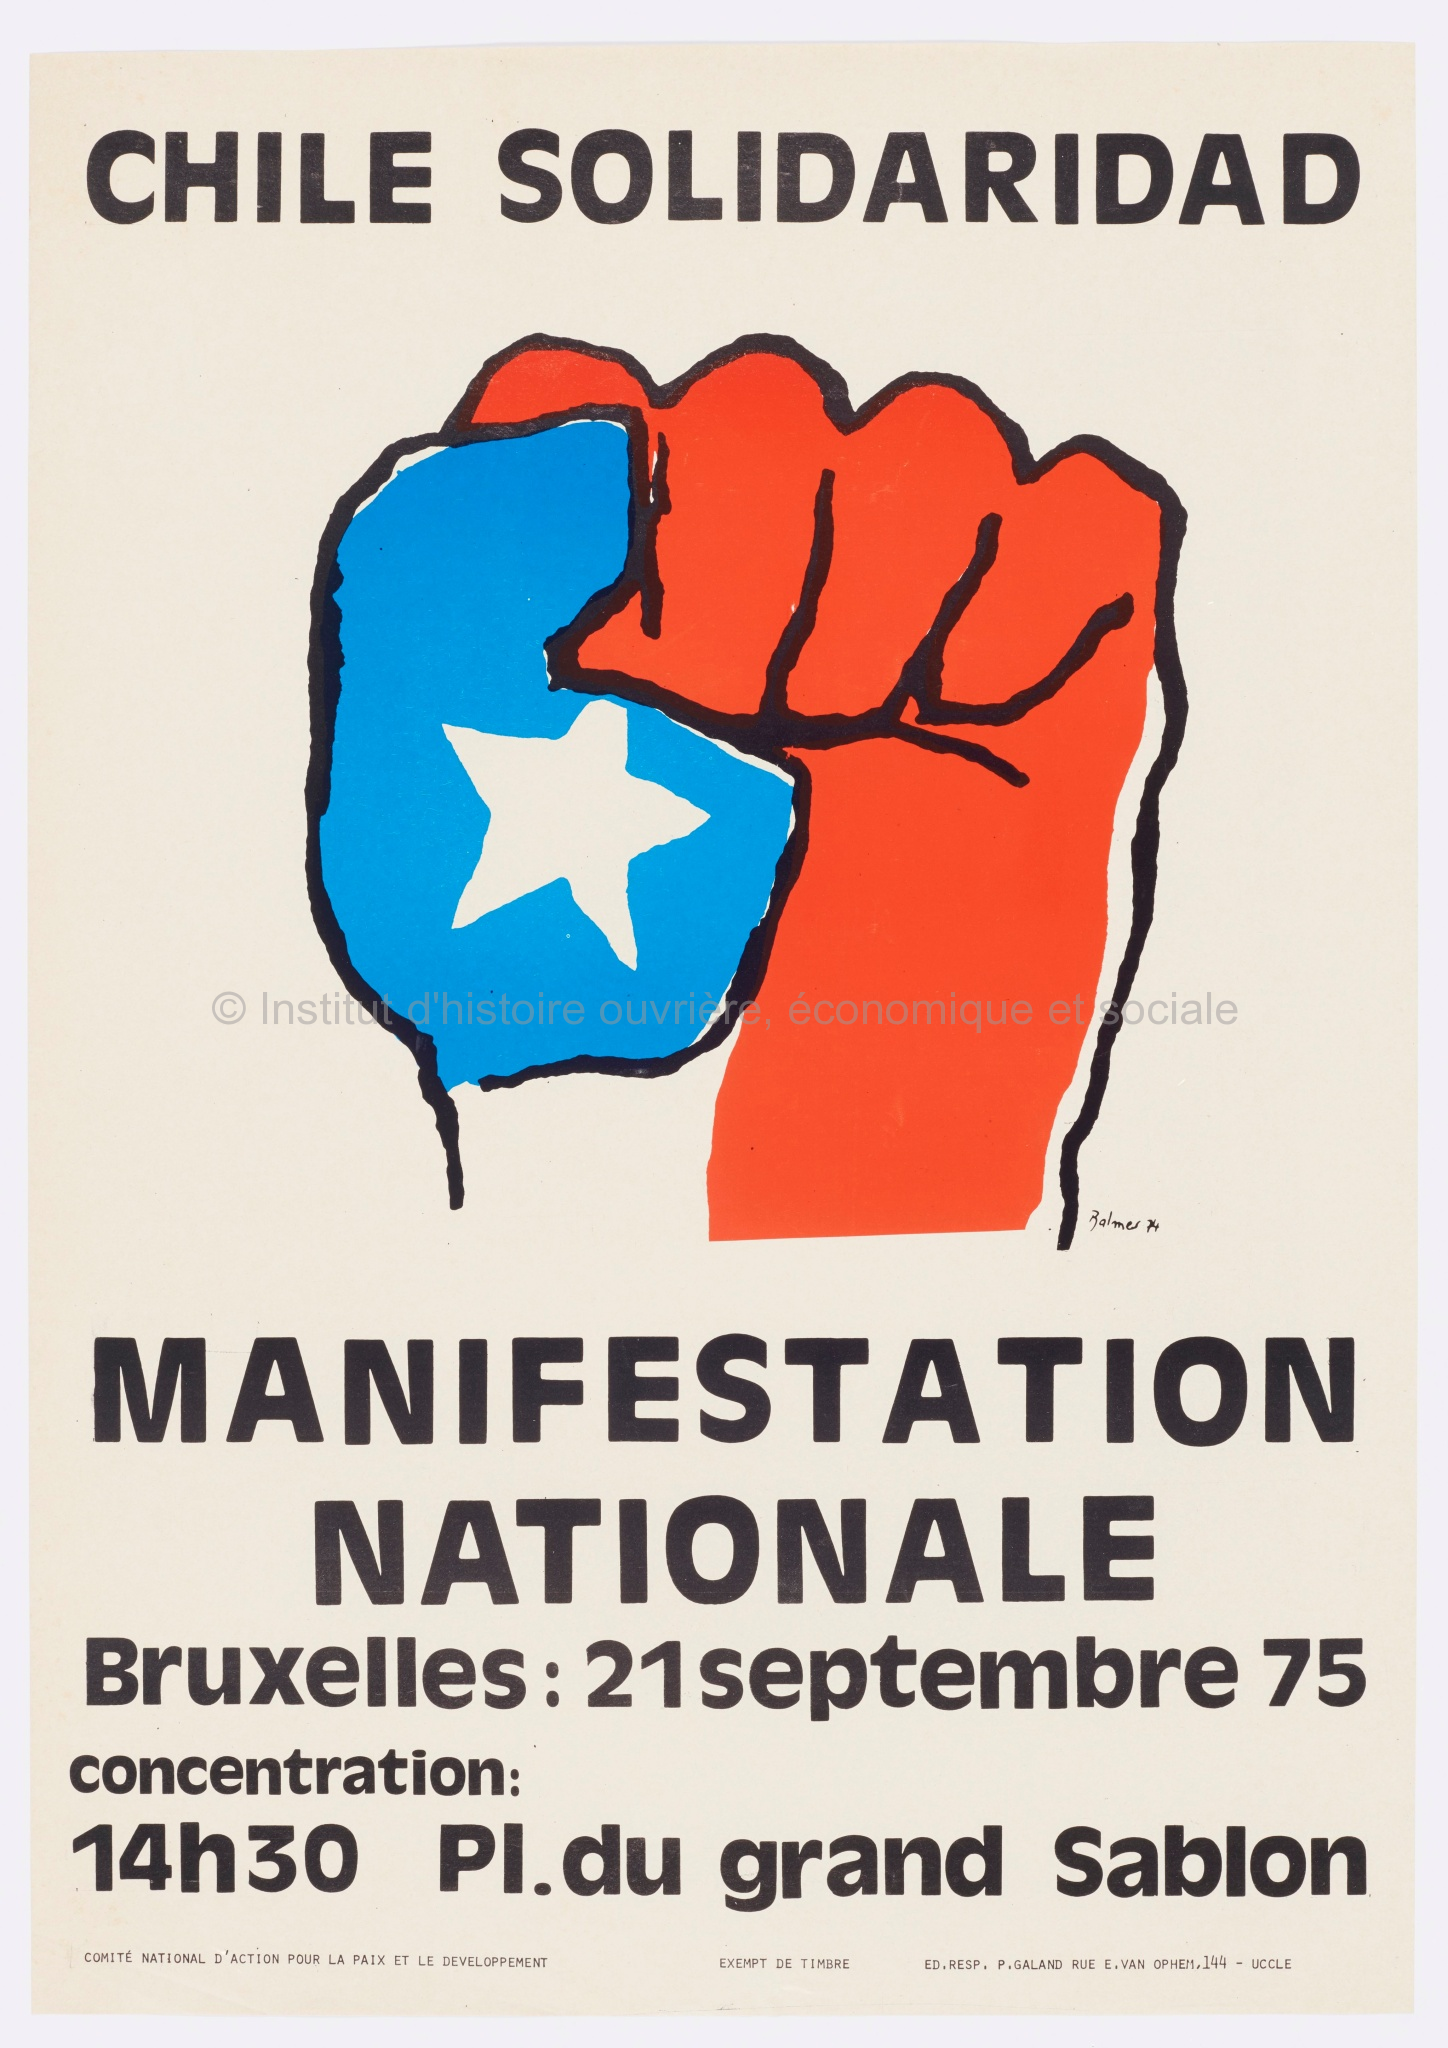 Chile solidaridad. Manifestation nationale Bruxelles : 21 septembre 75